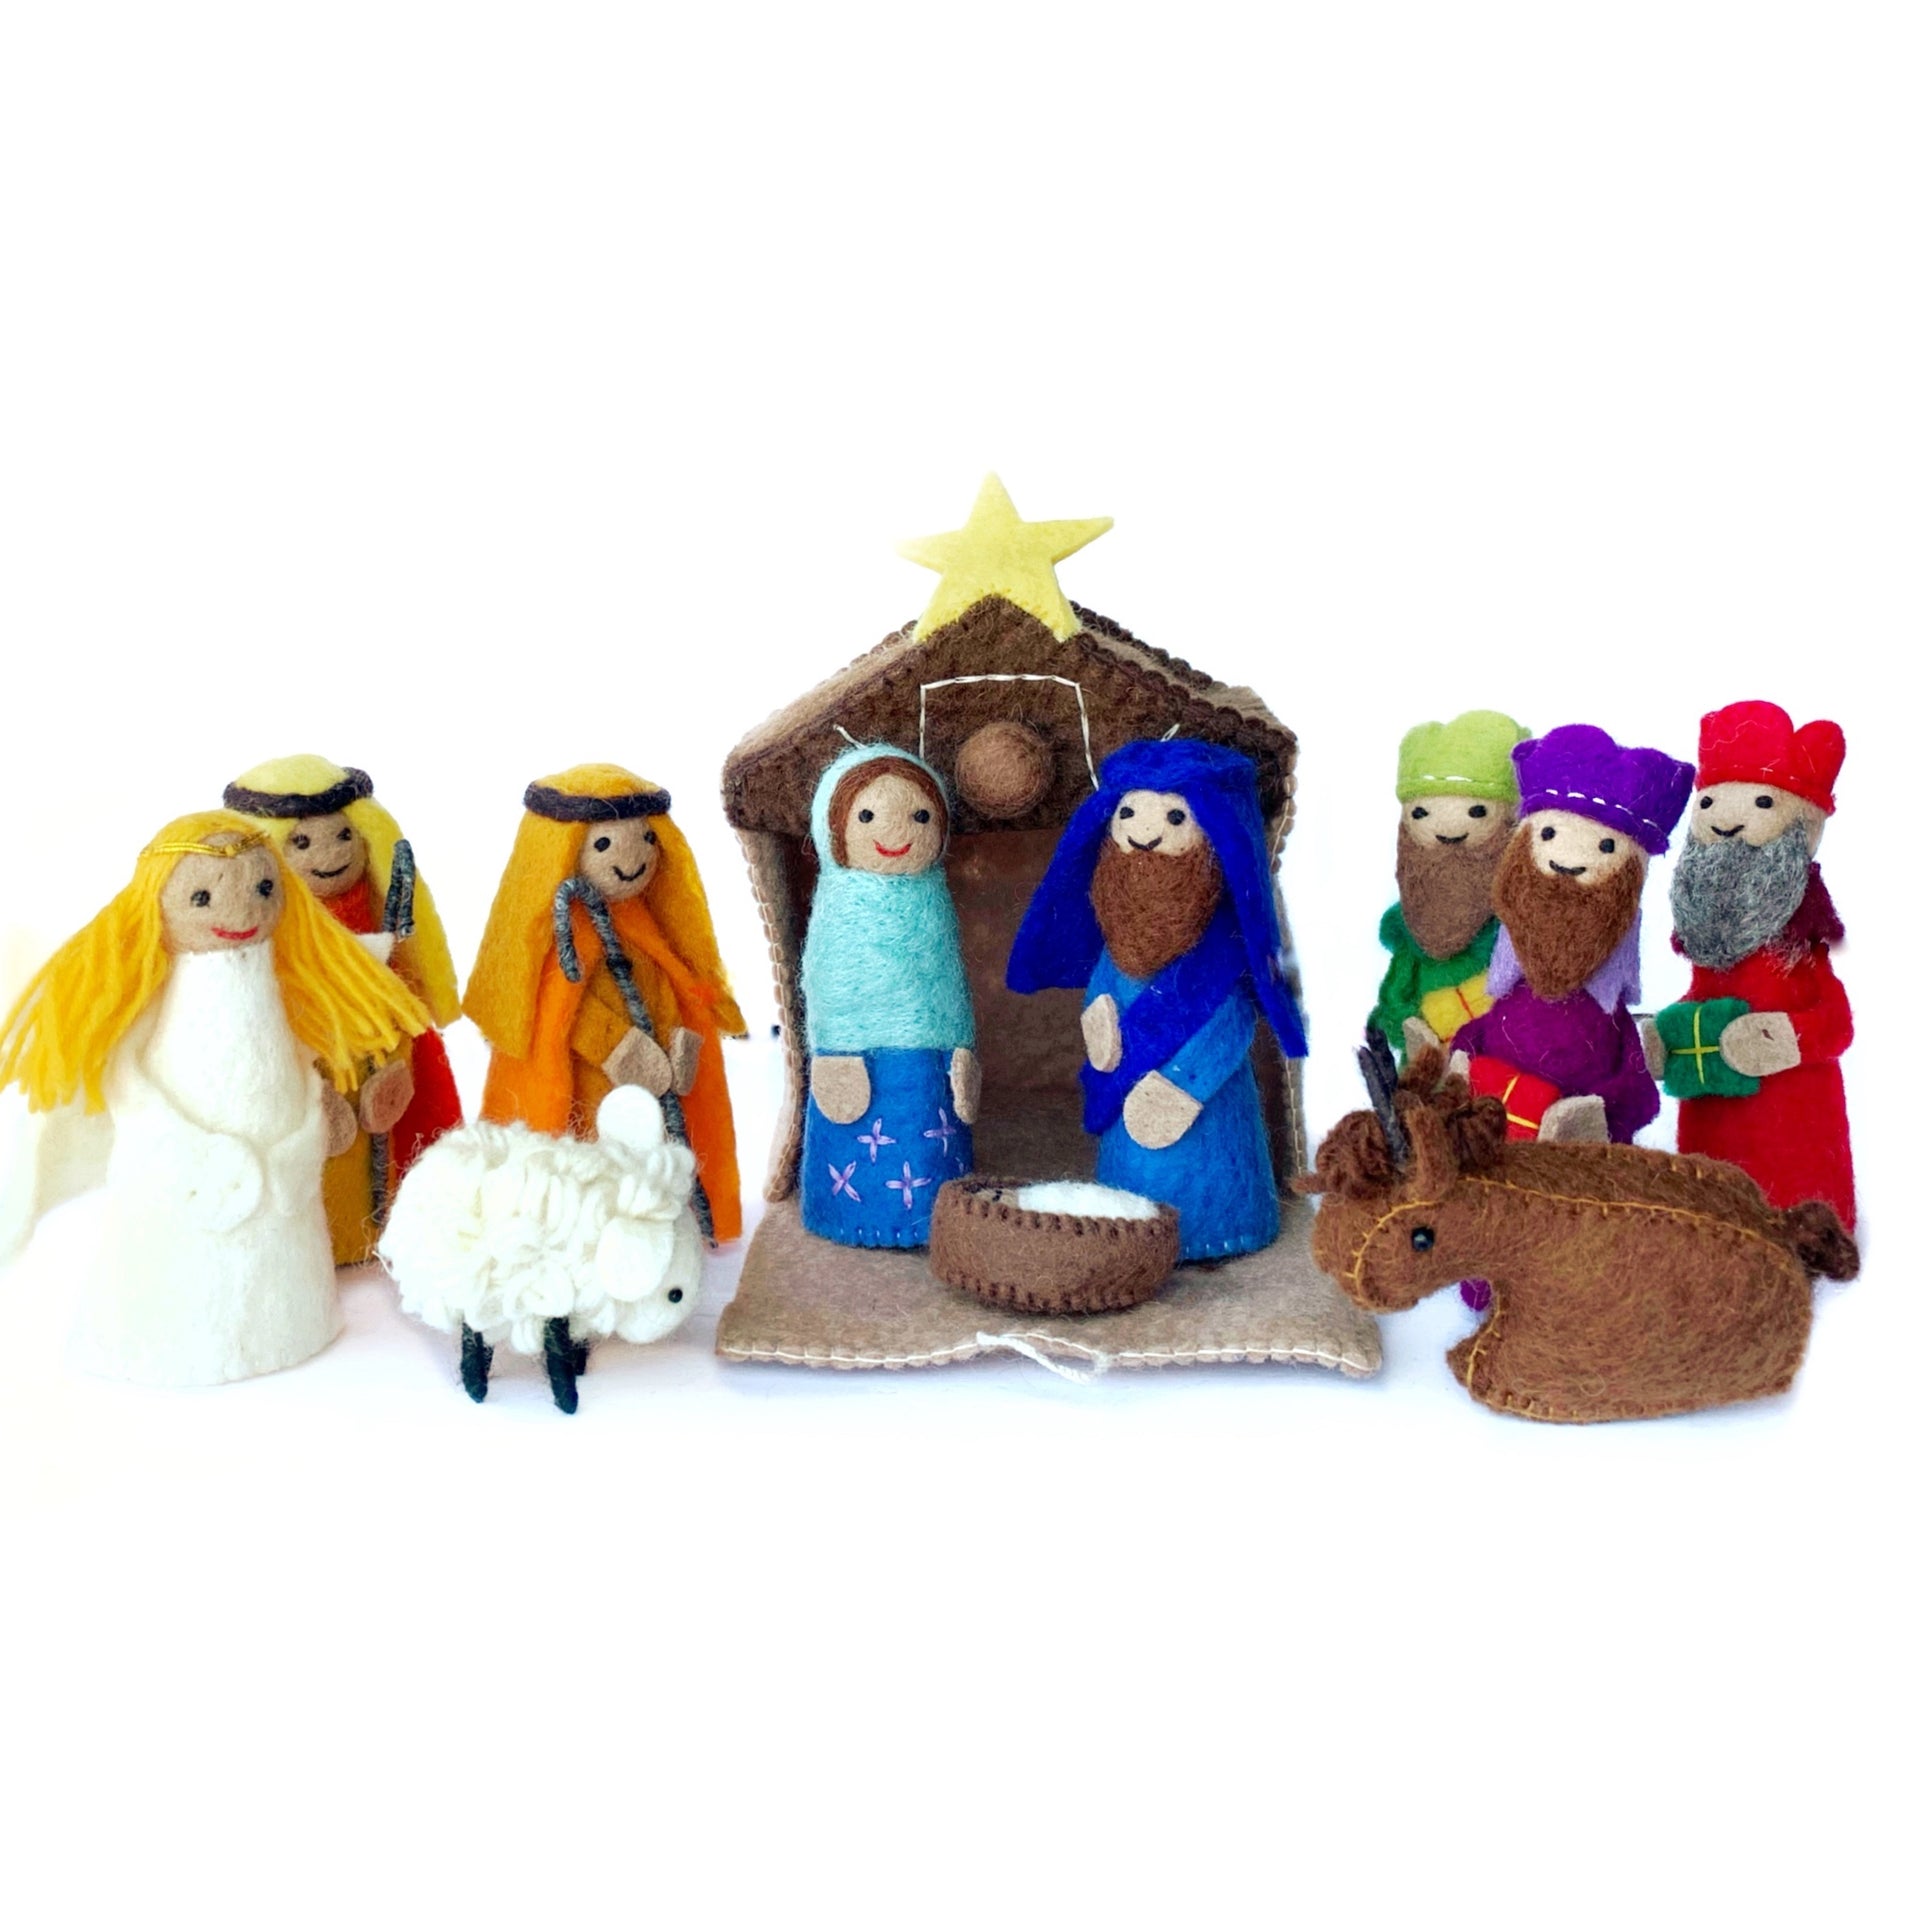 Colorful Felt Nativity Set